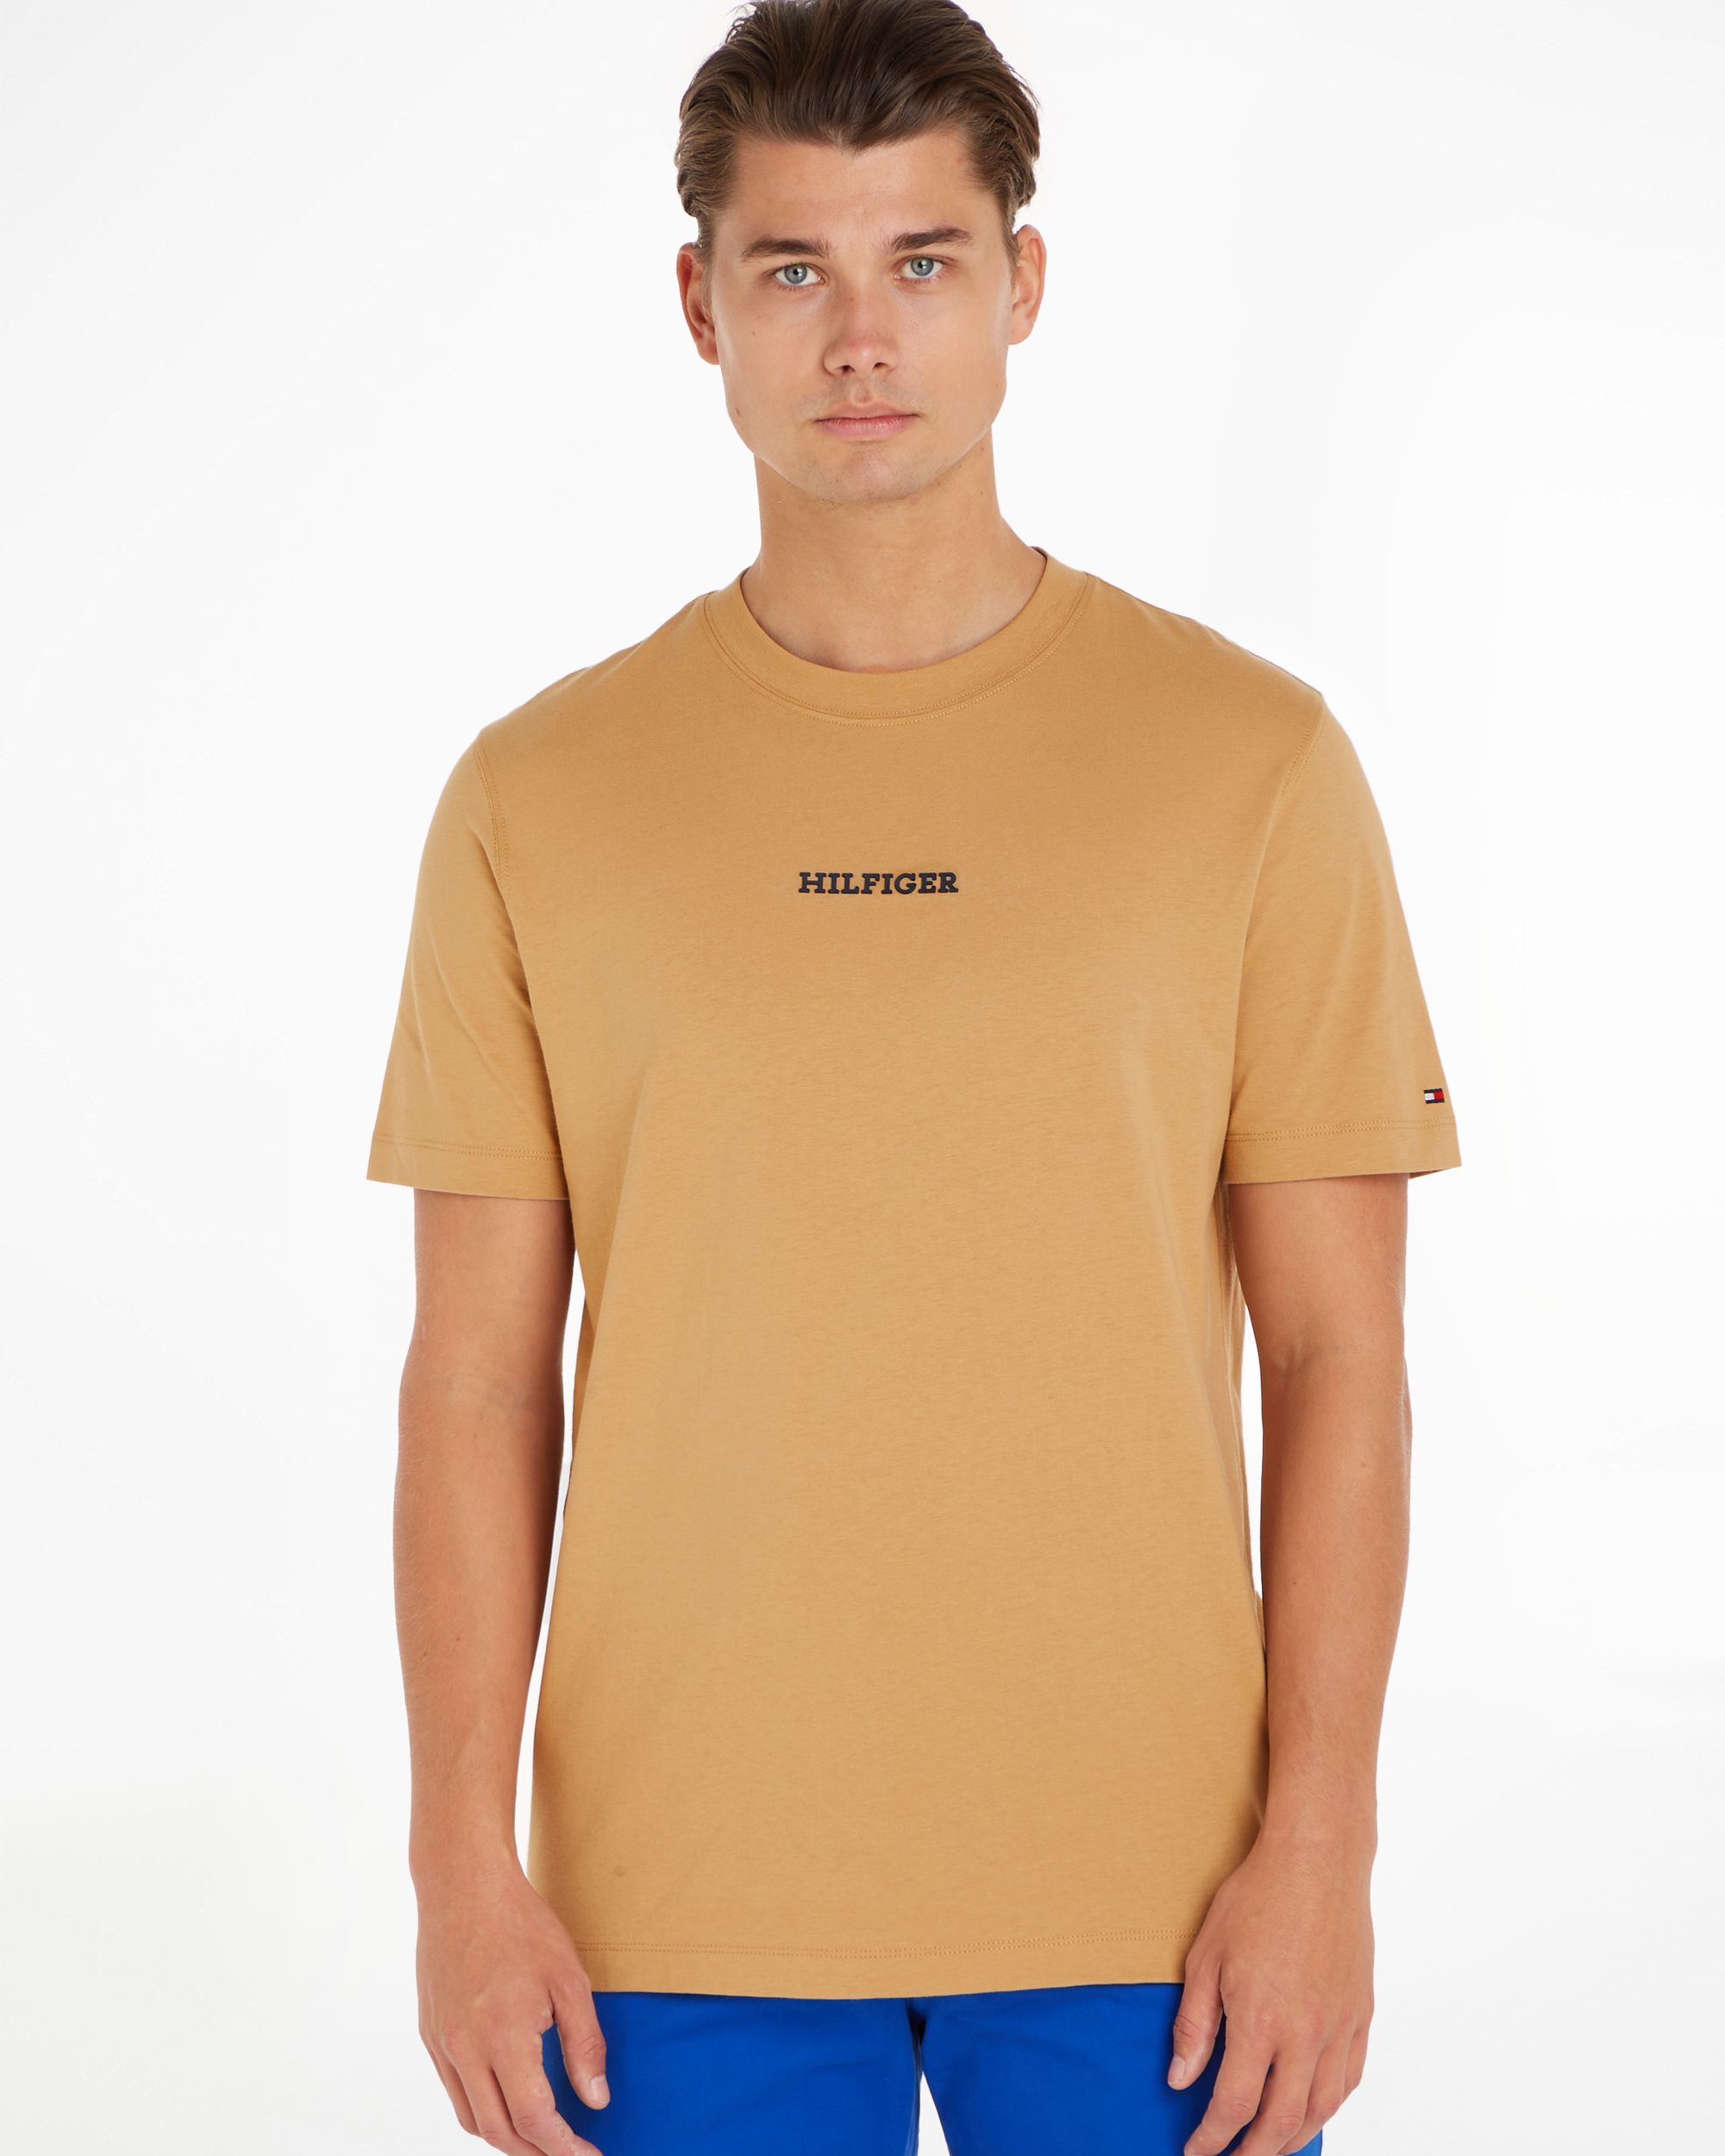 Tommy Hilfiger Menswear T-shirt KM Donker geel 089127-001-L